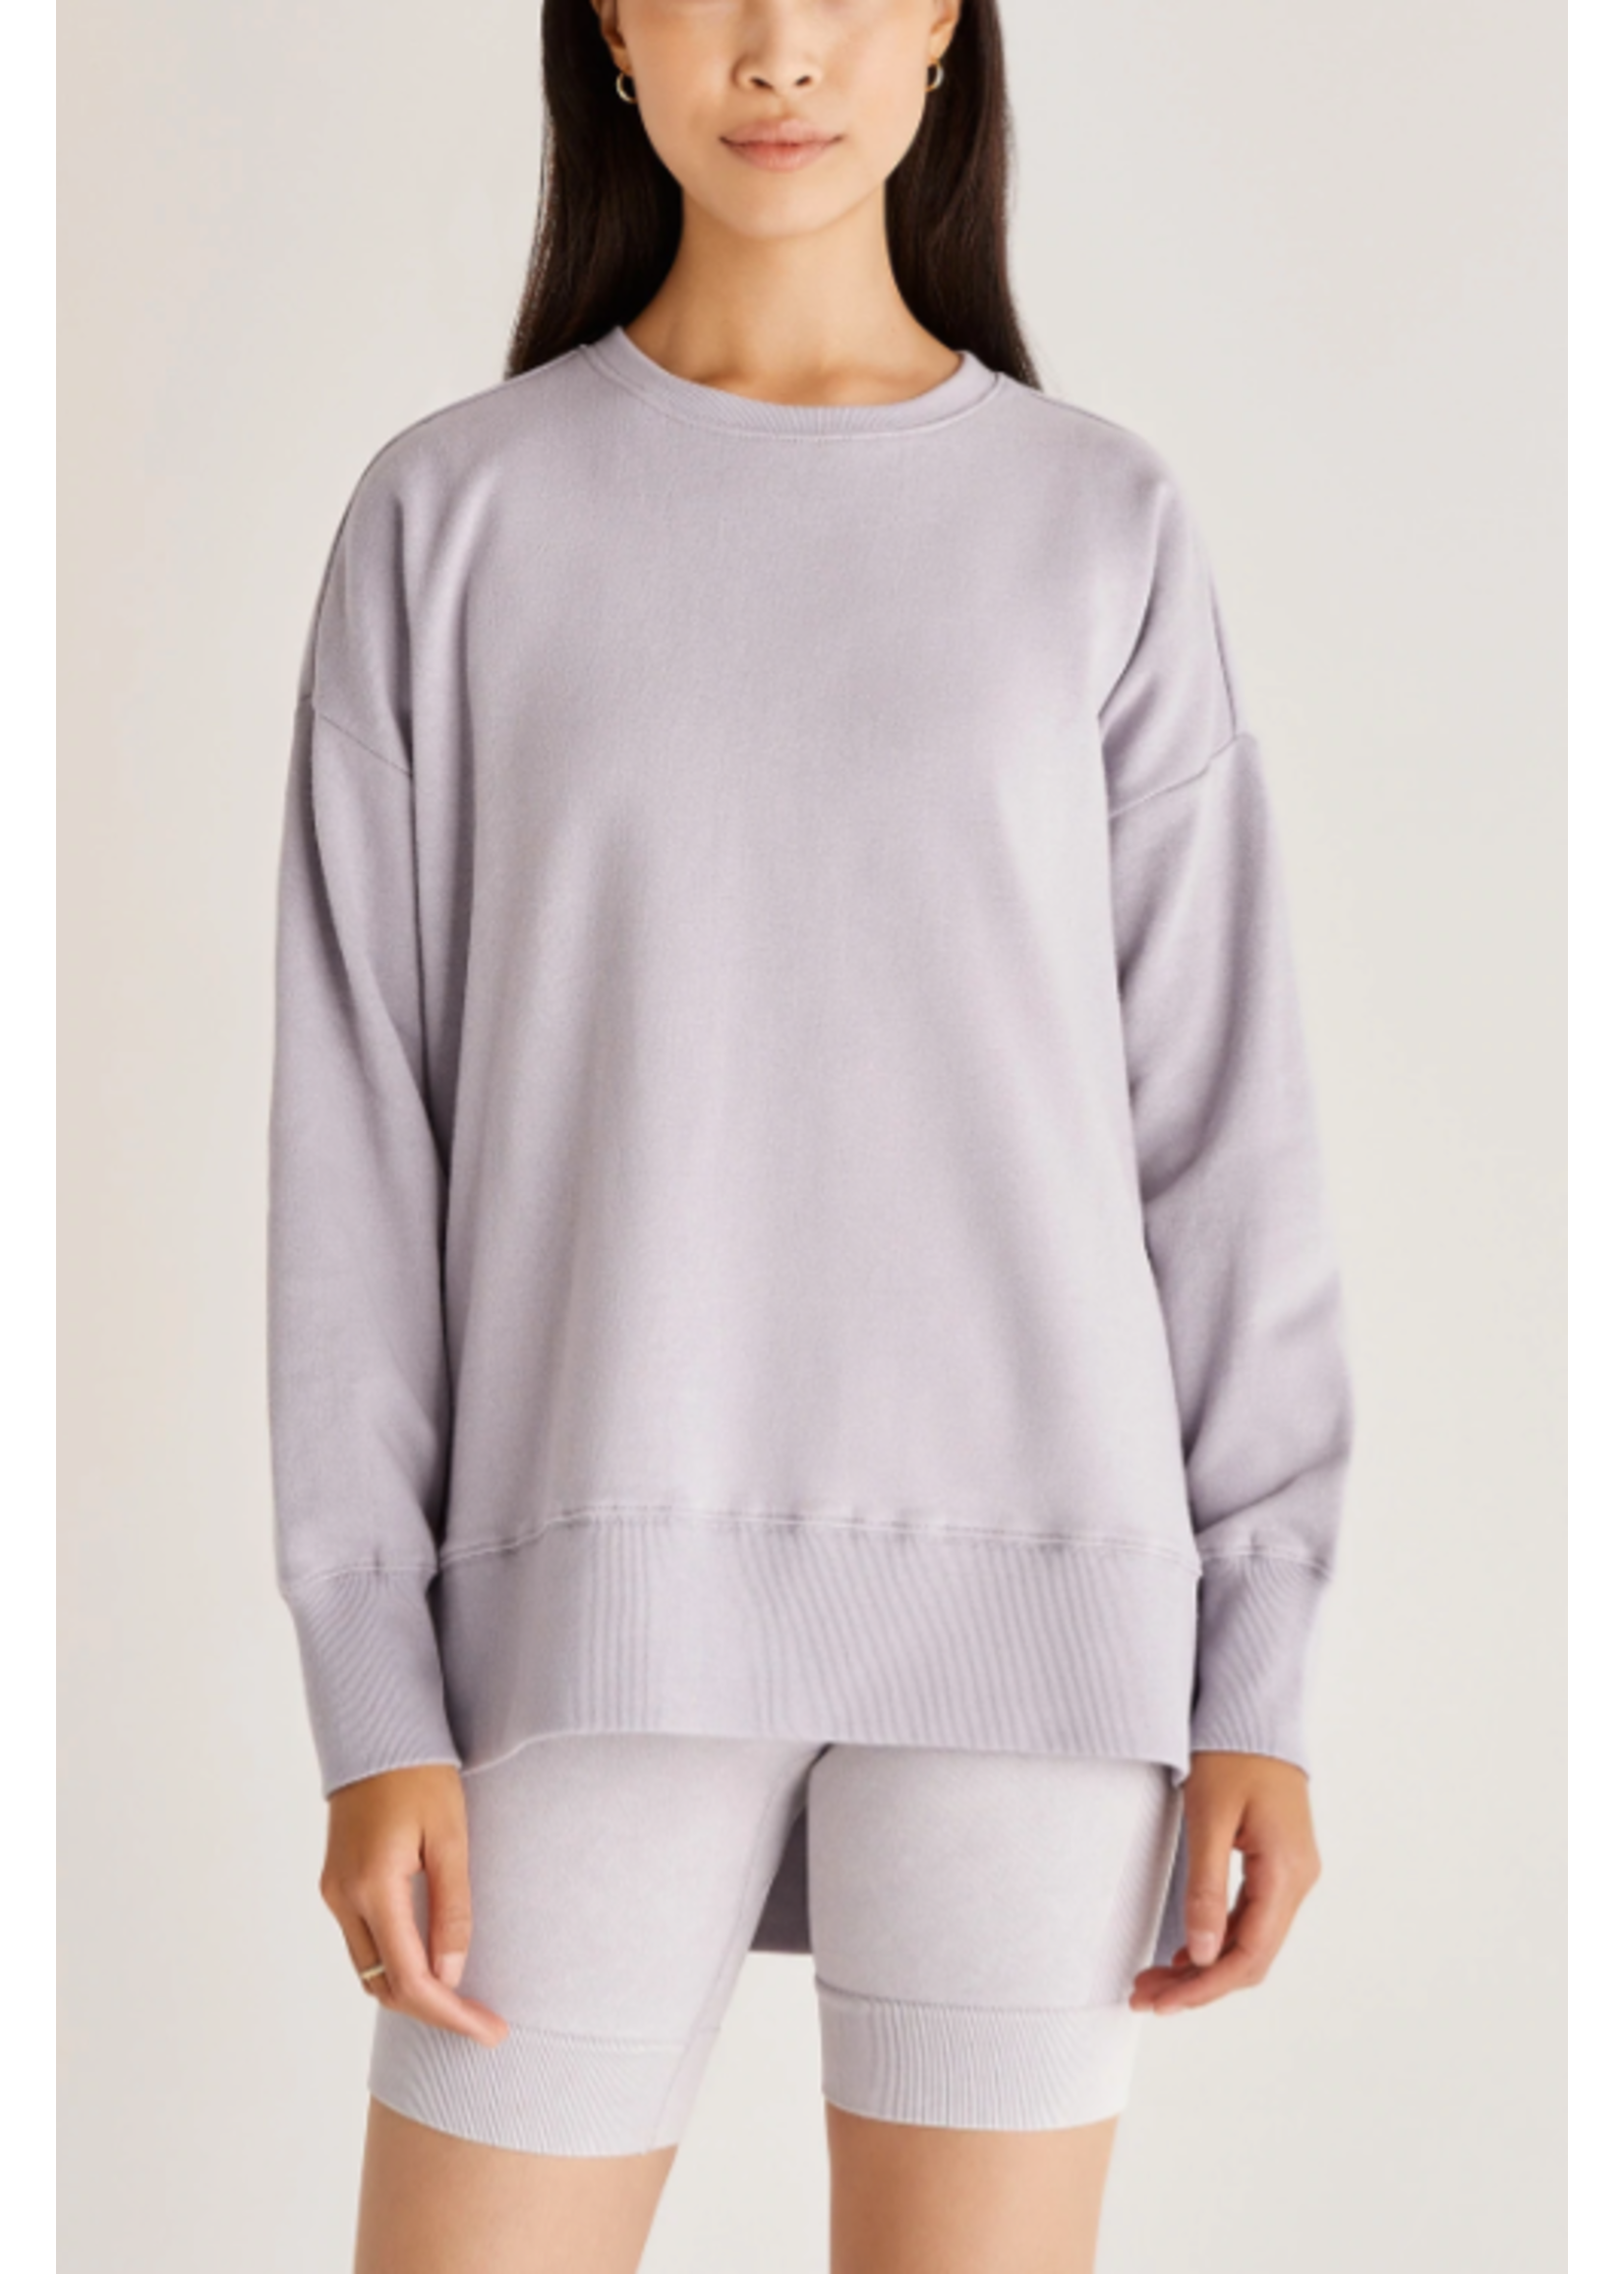 z supply Layer Up Sweatshirt